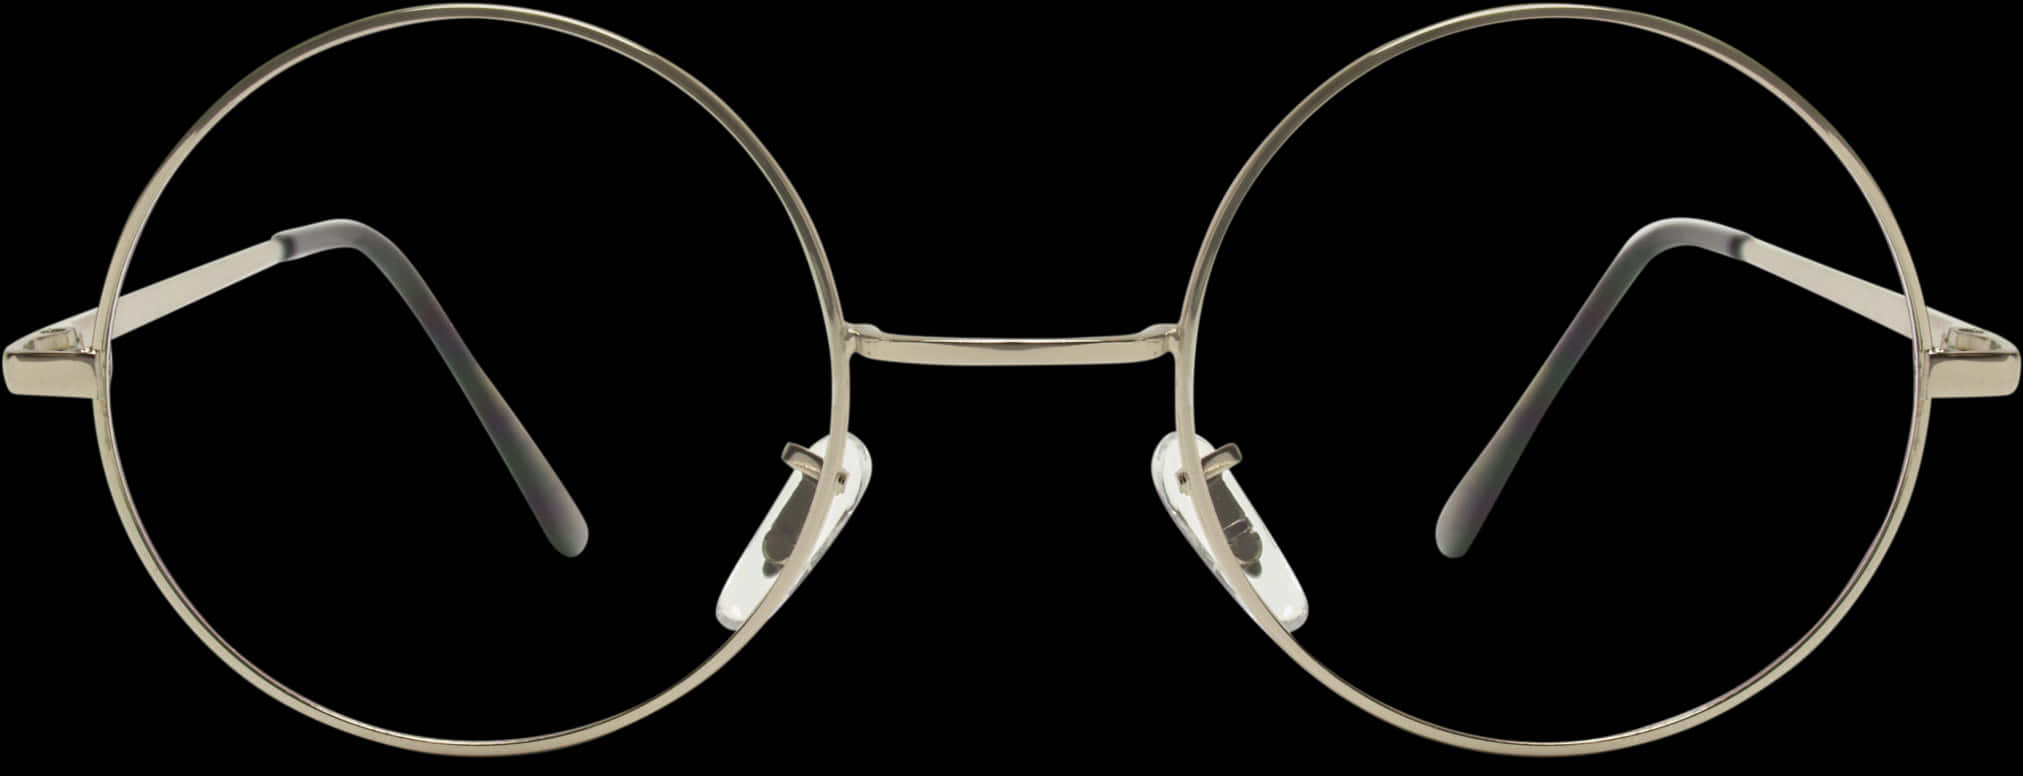 Round Metal Eyeglasses Isolated